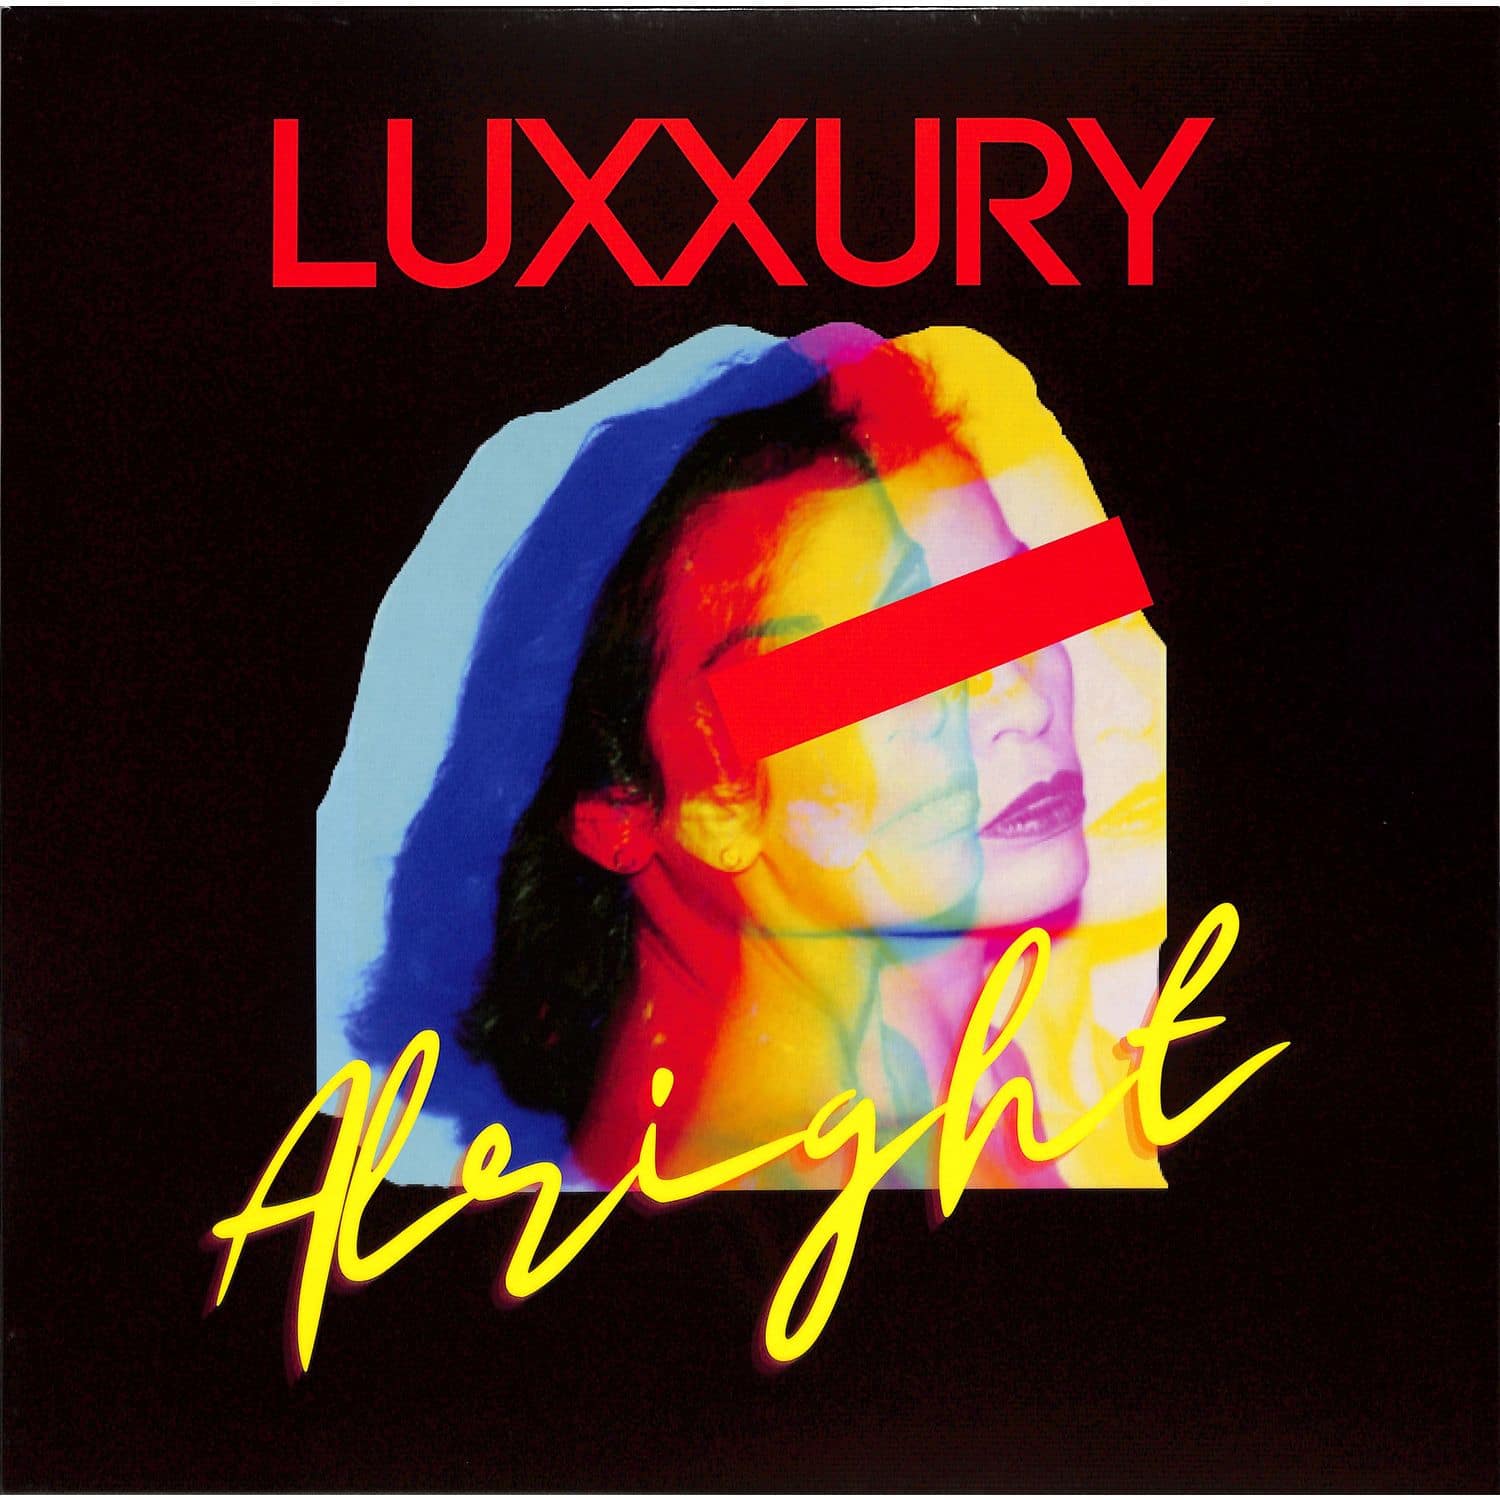 Luxxury - ALRIGHT 